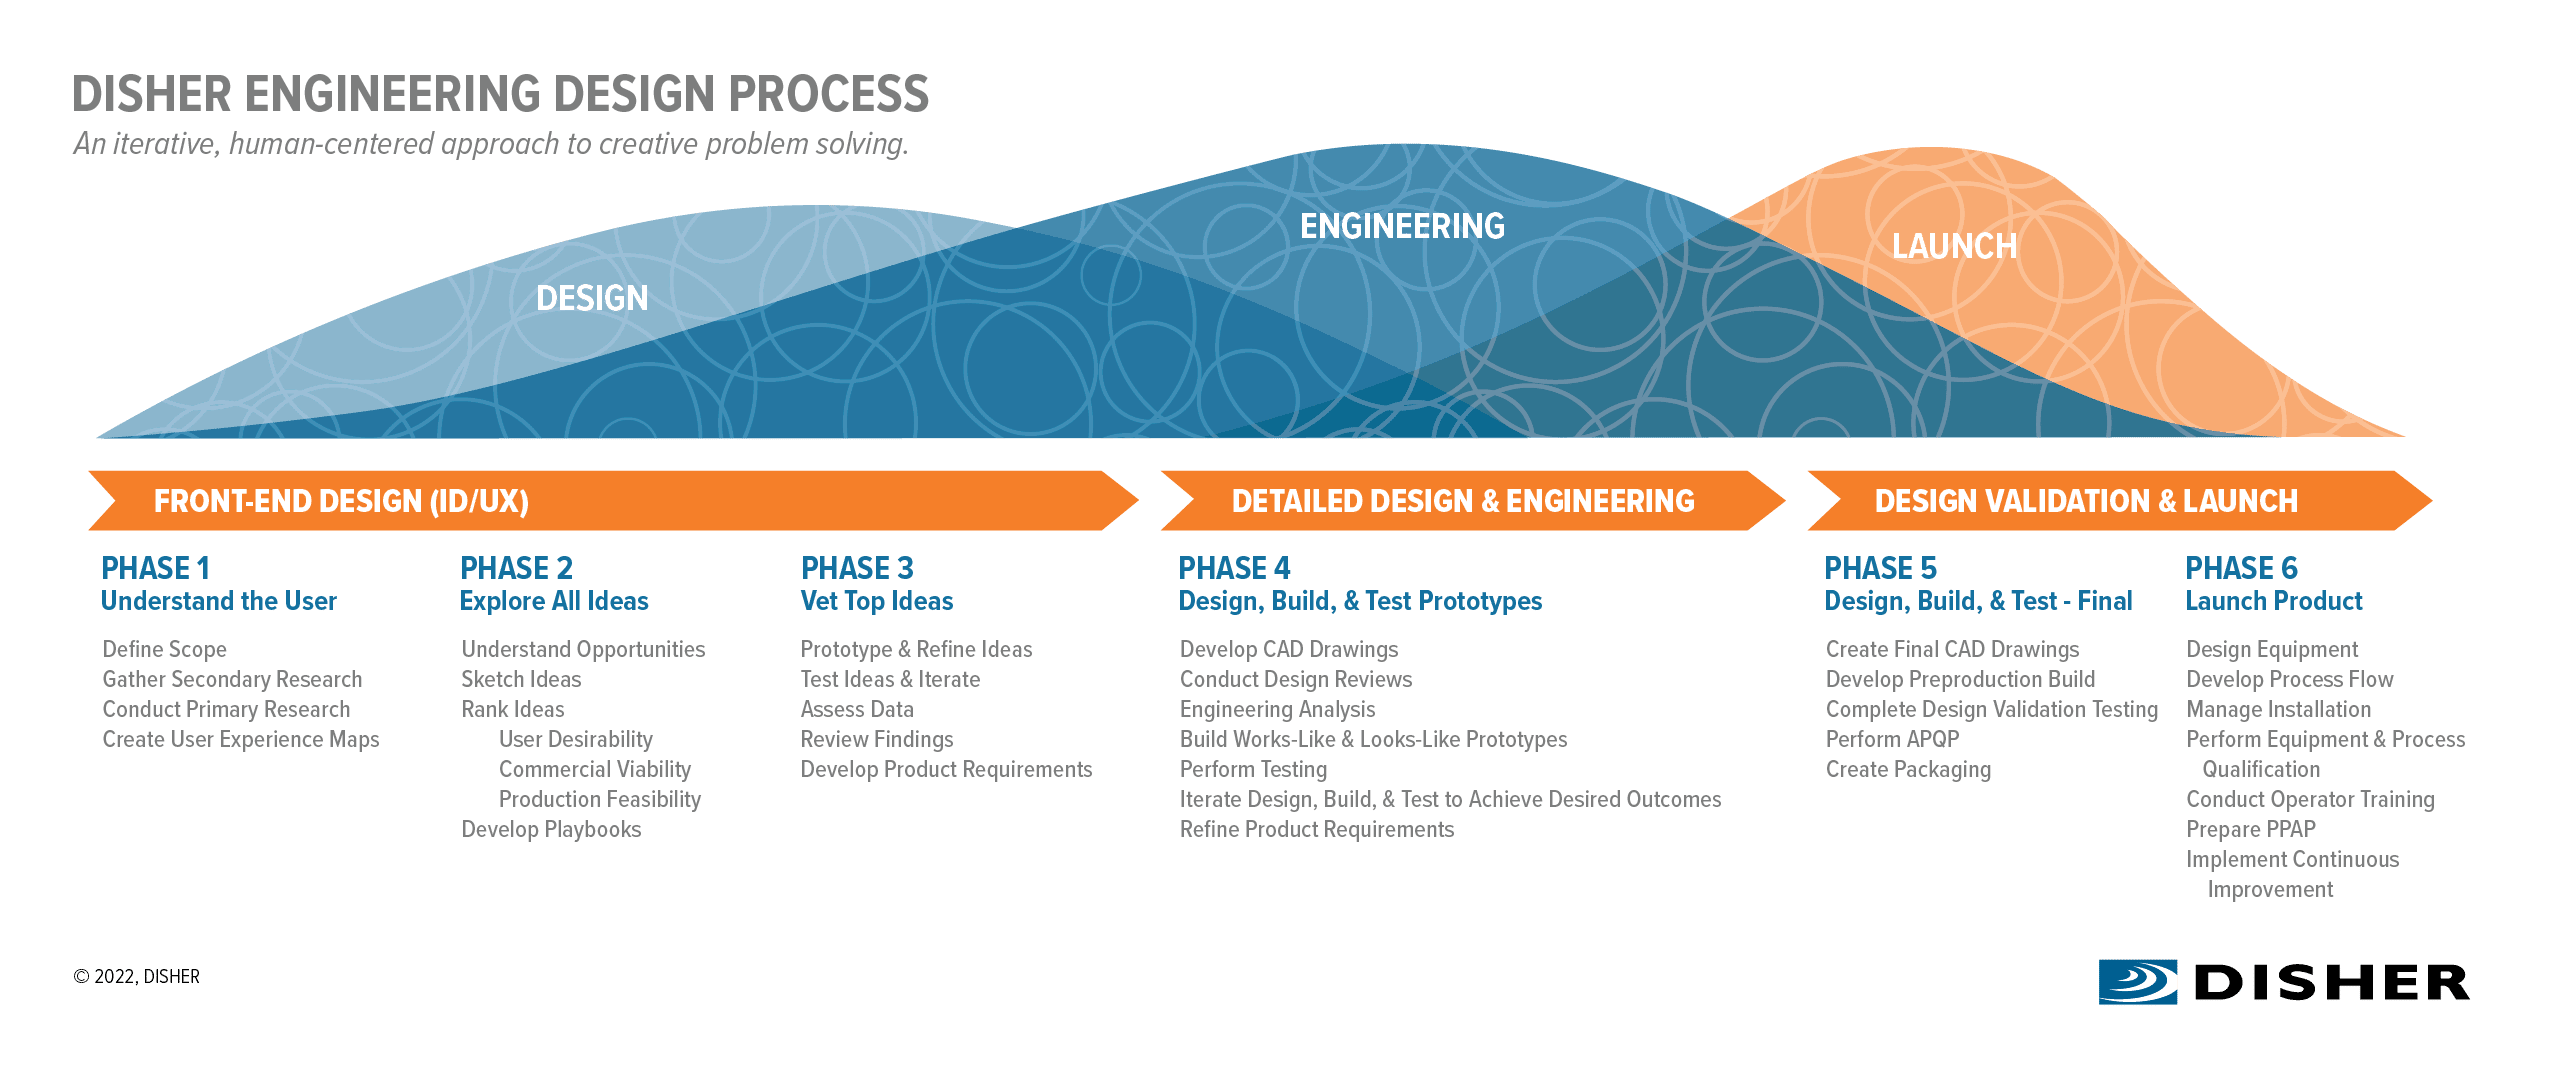 Engineering Design Process Infographic